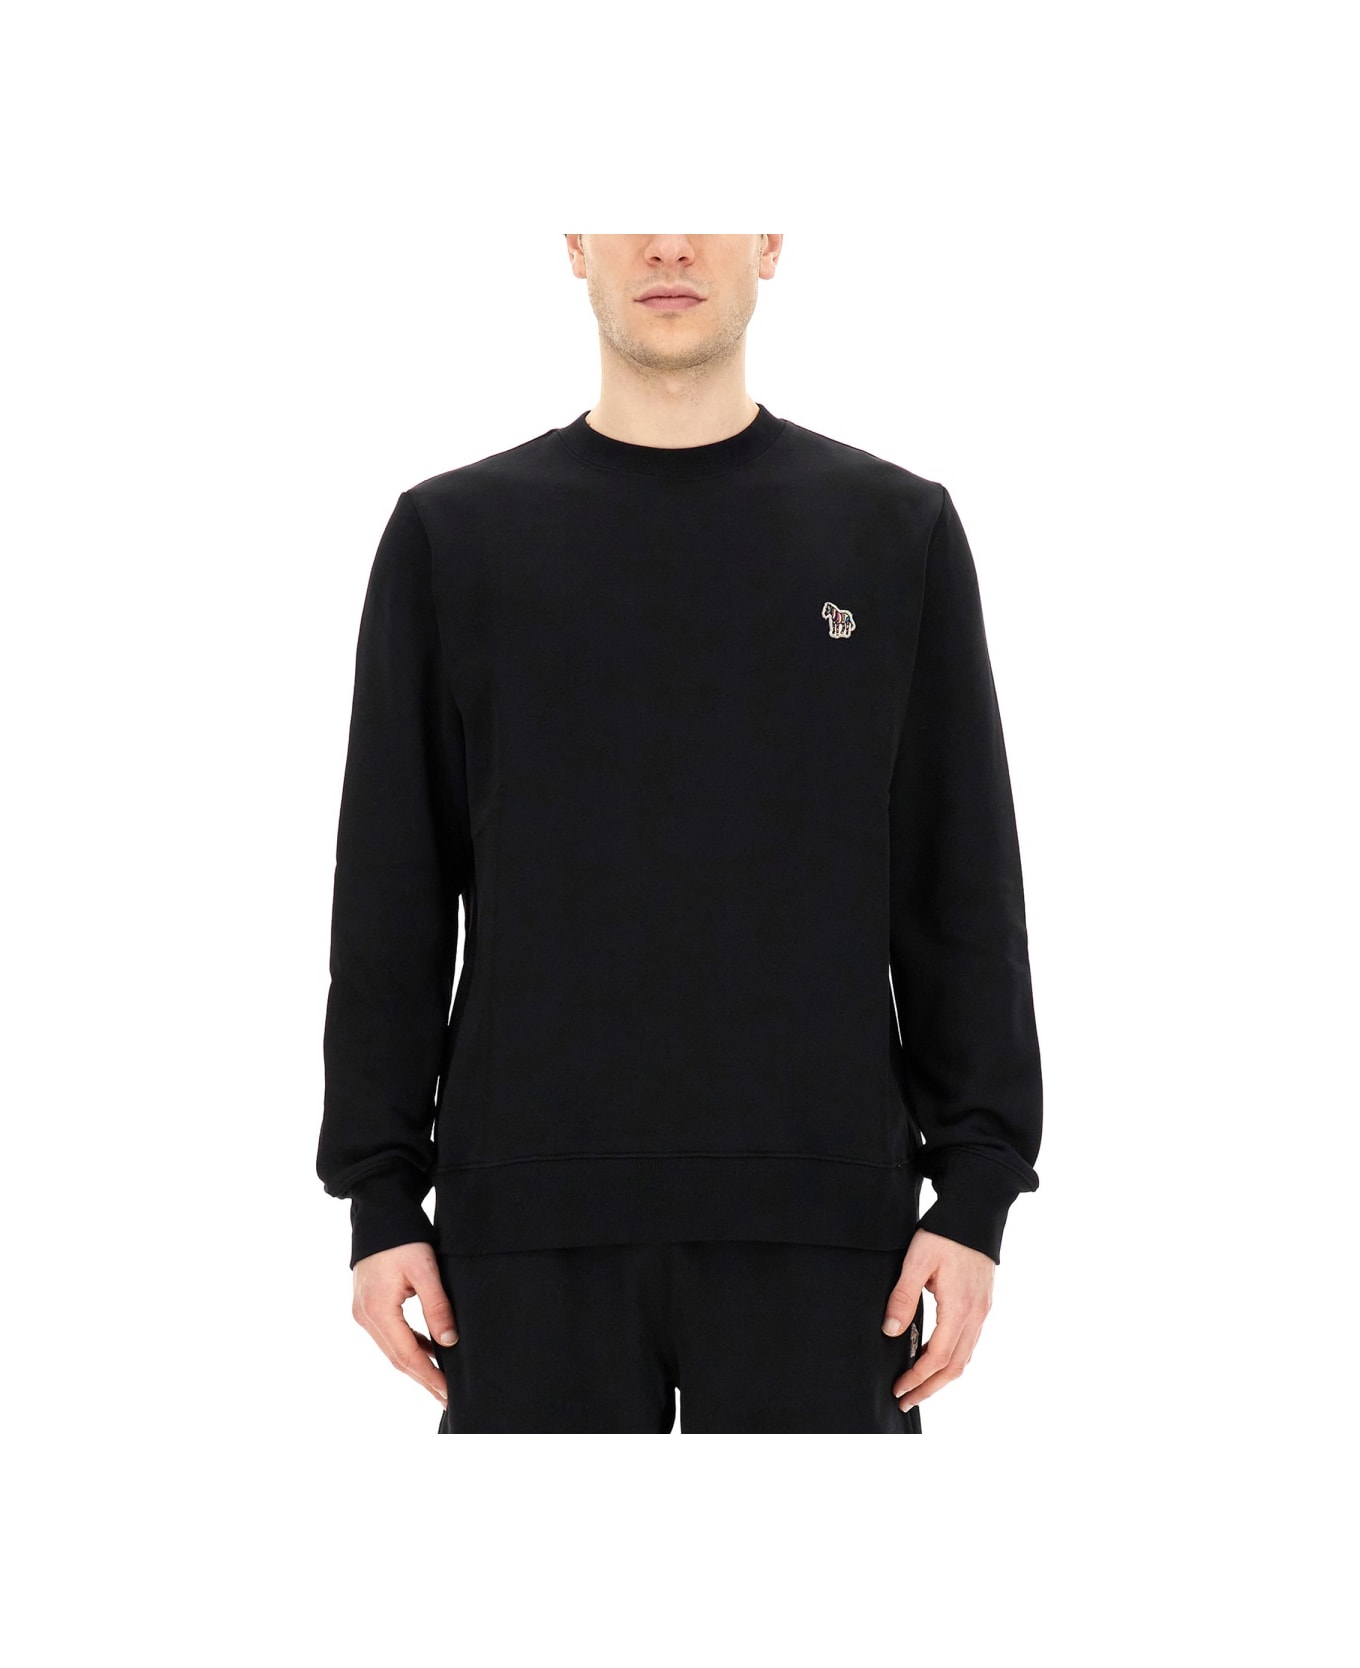 PS by Paul Smith Sweatshirt With Zebra Embroidery - BLACK